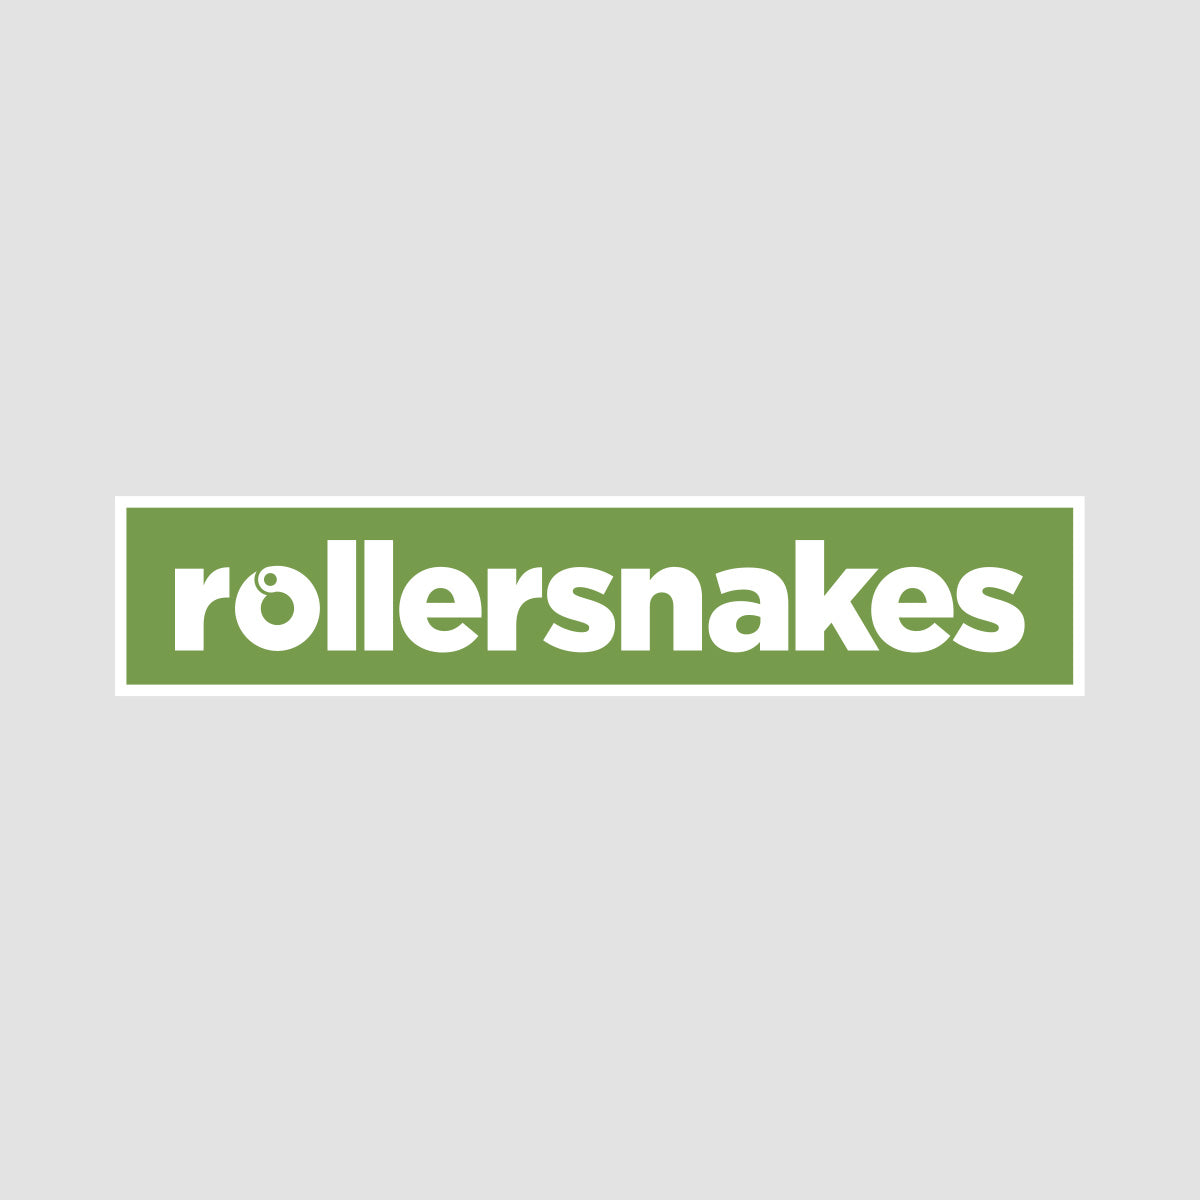 Rollersnakes WordMark Sticker Leaf Green 200x41mm